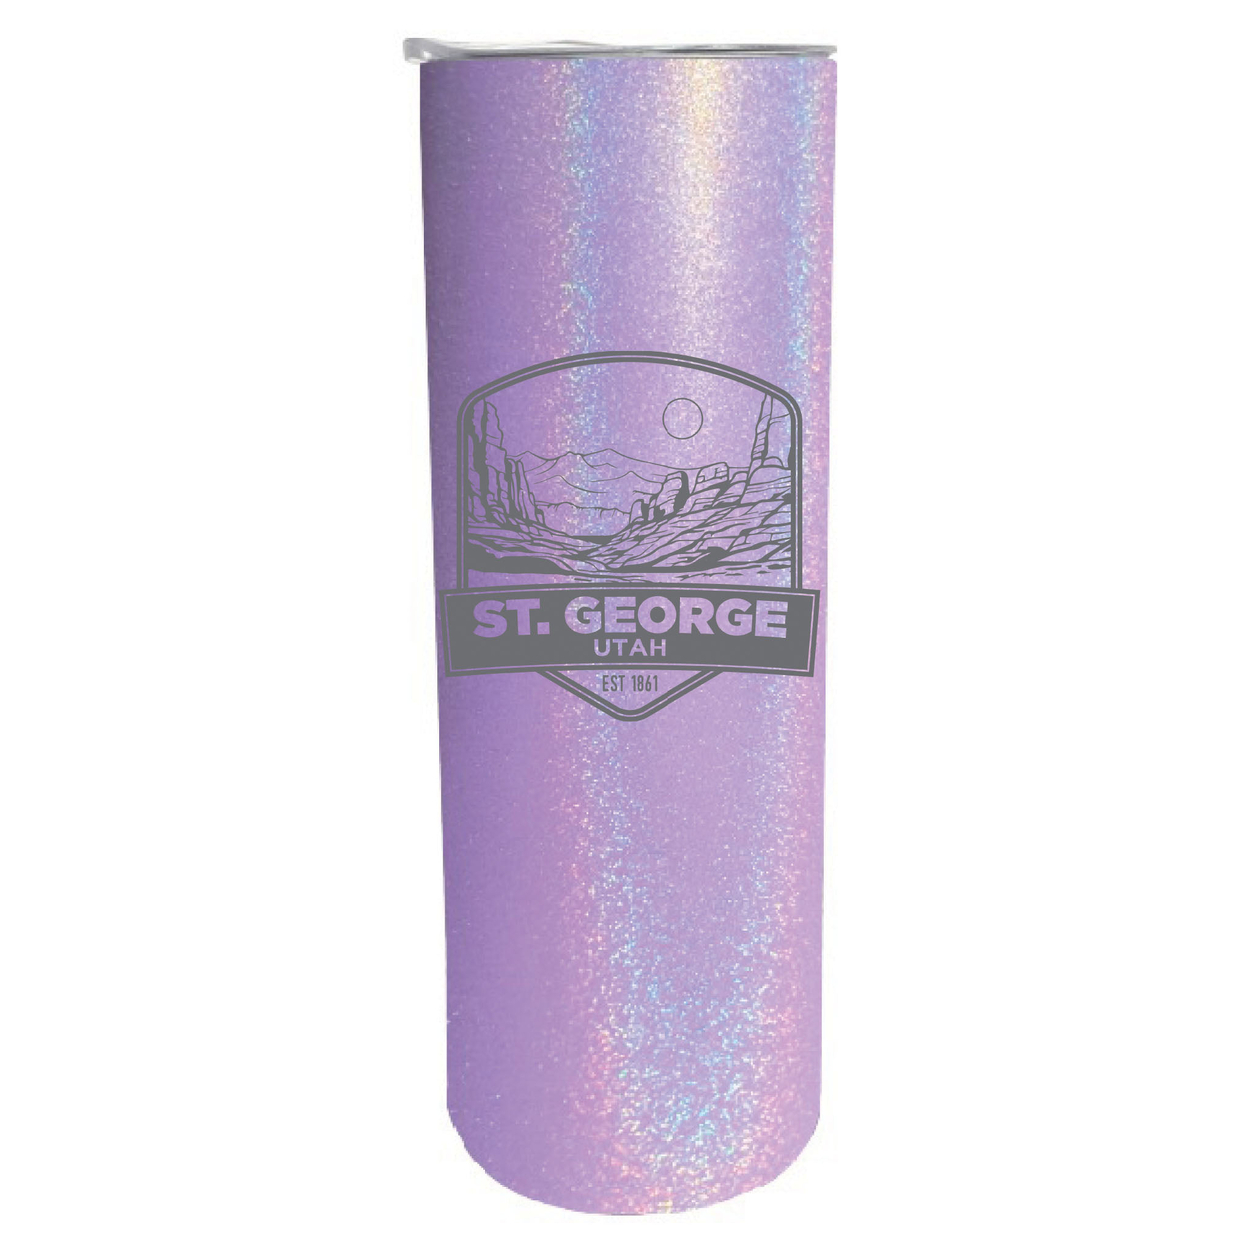 St. George Utah Souvenir 20 Oz Engraved Insulated Stainless Steel Skinny Tumbler - Gray Glitter,,Single Unit